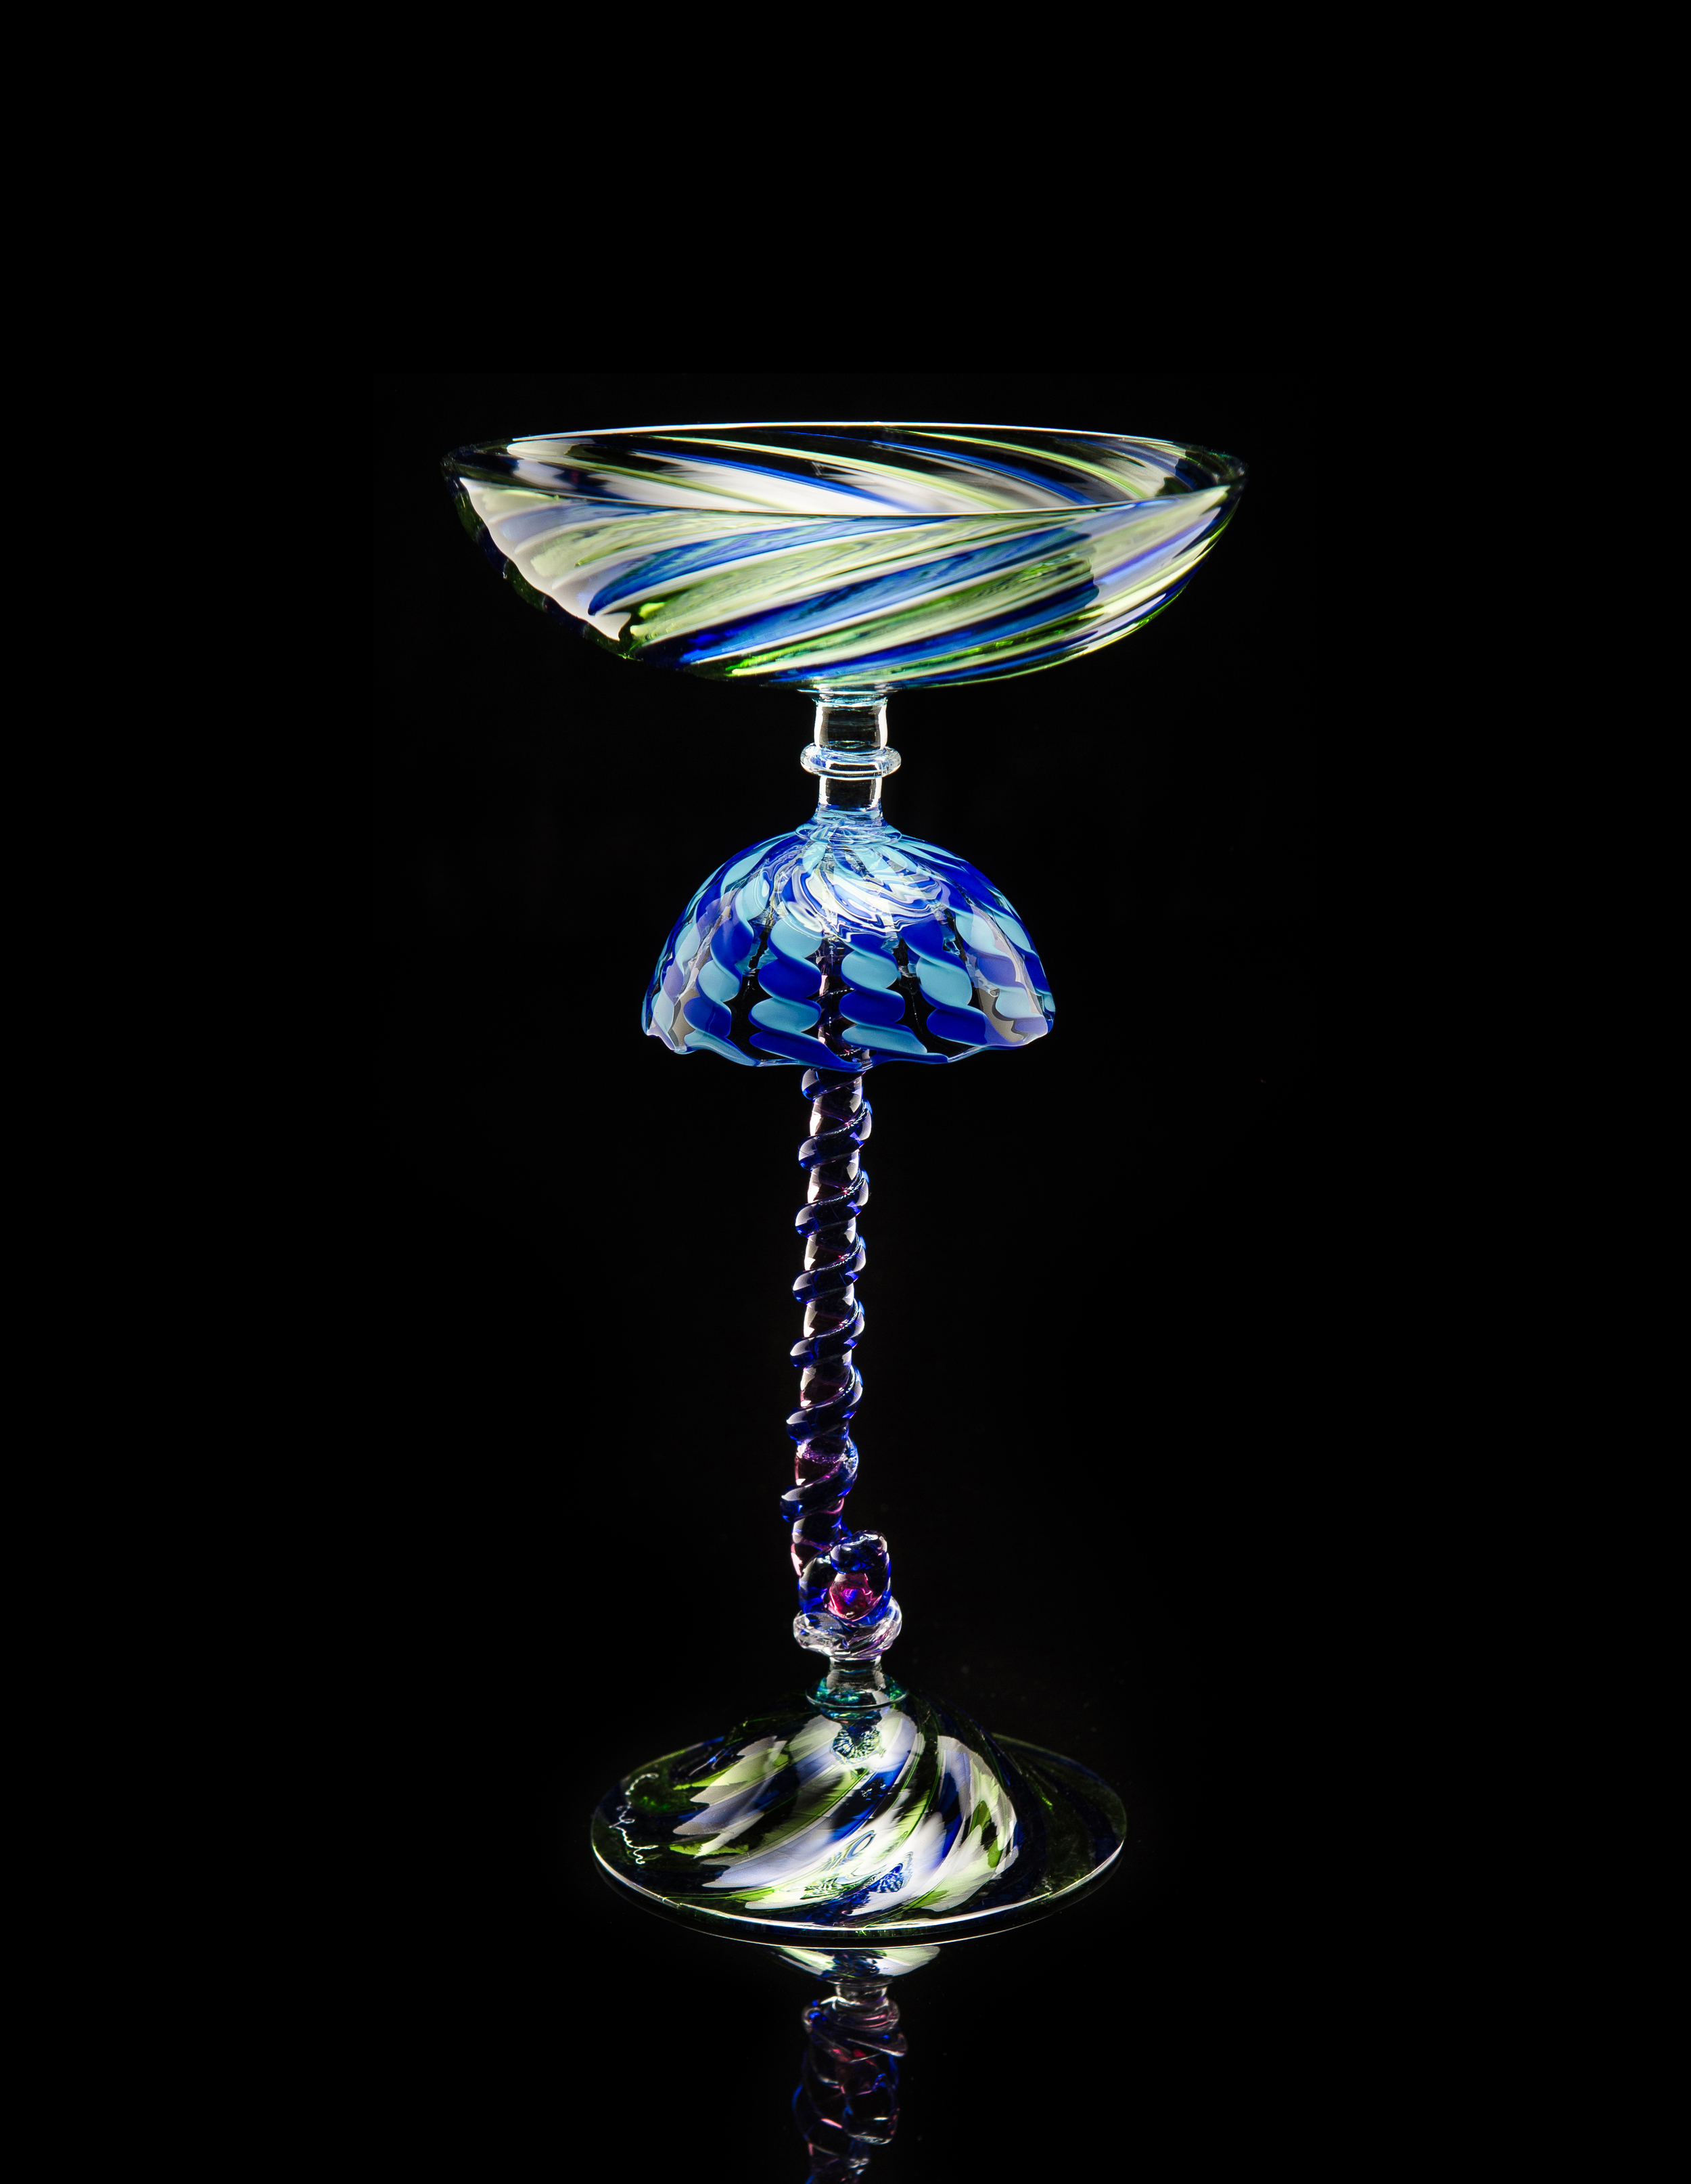  Lino Tagliapietra,&nbsp; Goblet&nbsp; (1991-1994, glass, 10 1/8 x 5 5/8 x 5 5/8 inches), LT.48 